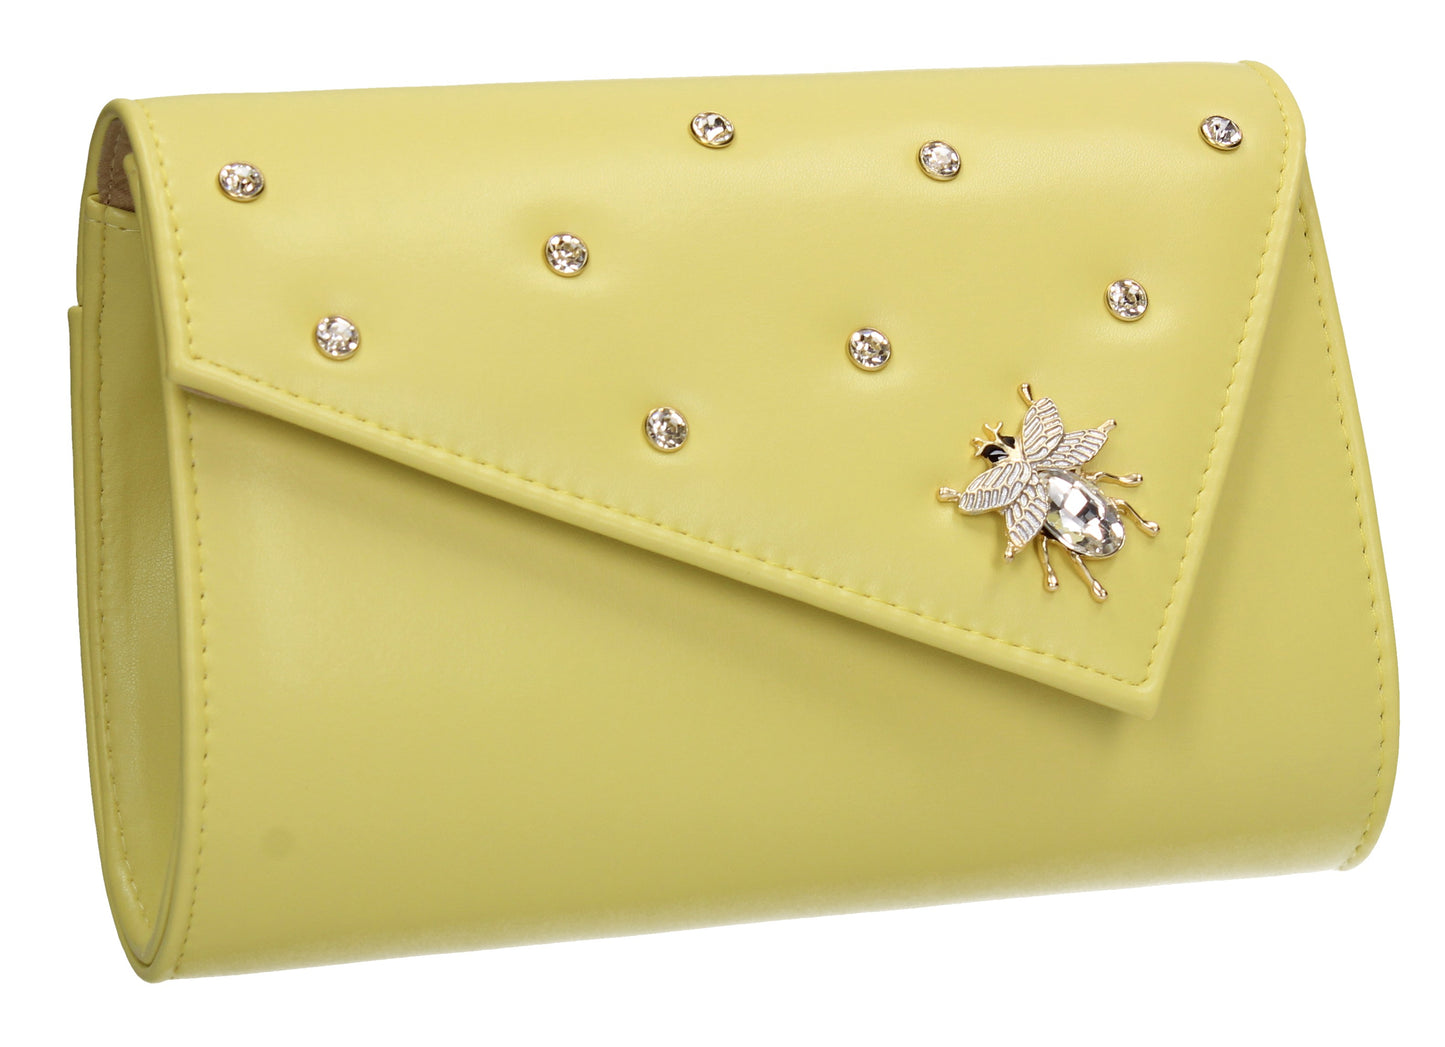 SWANKYSWANS Nylah Clutch Bag Yellow Cute Cheap Clutch Bag For Weddings School and Work